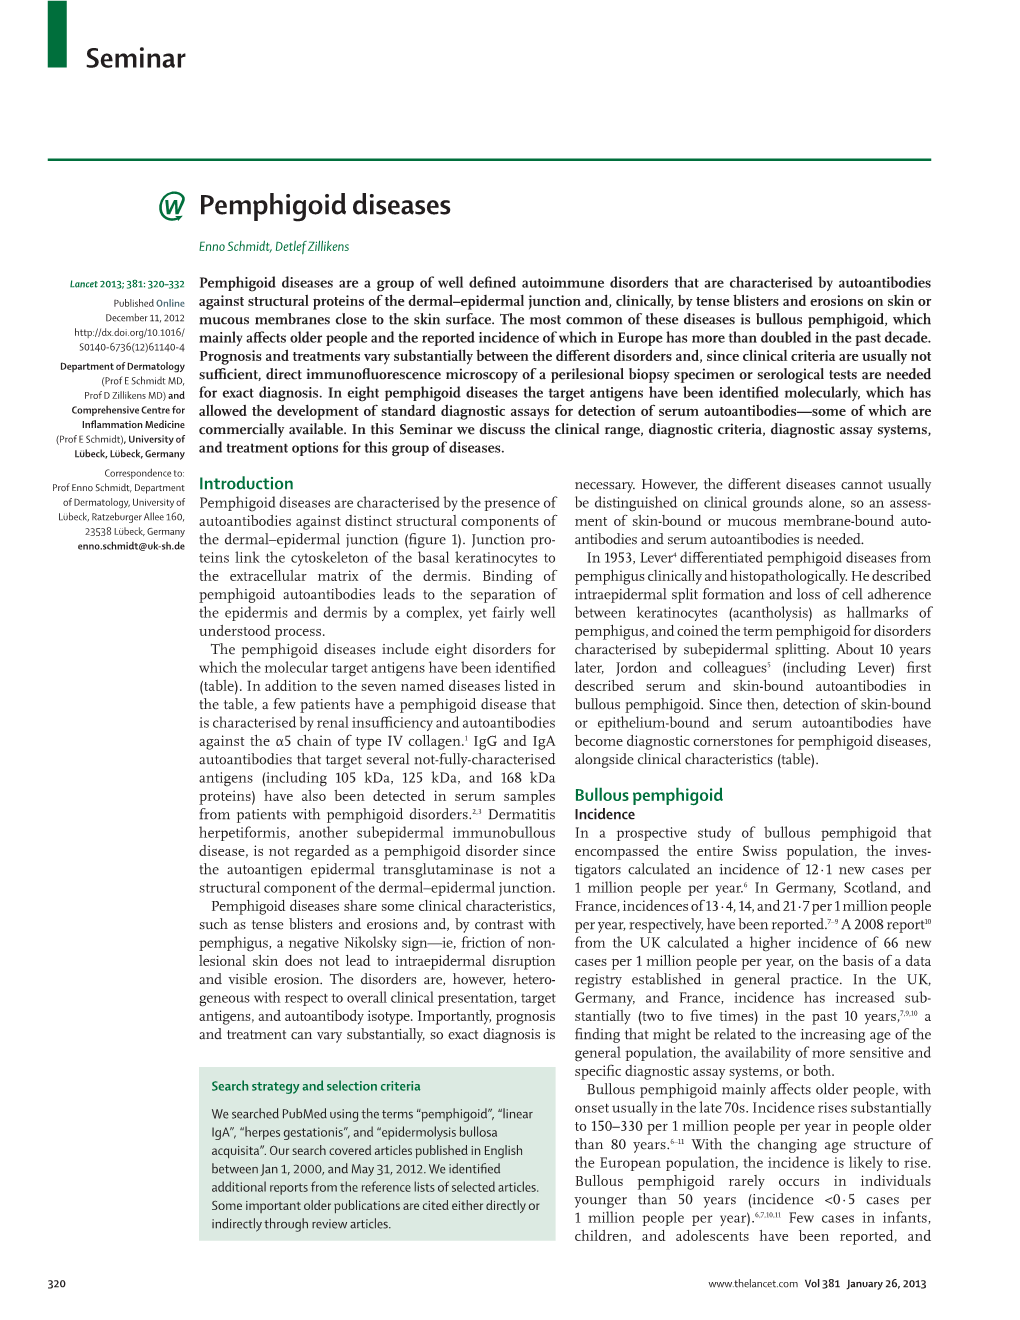 Pemphigoid Diseases